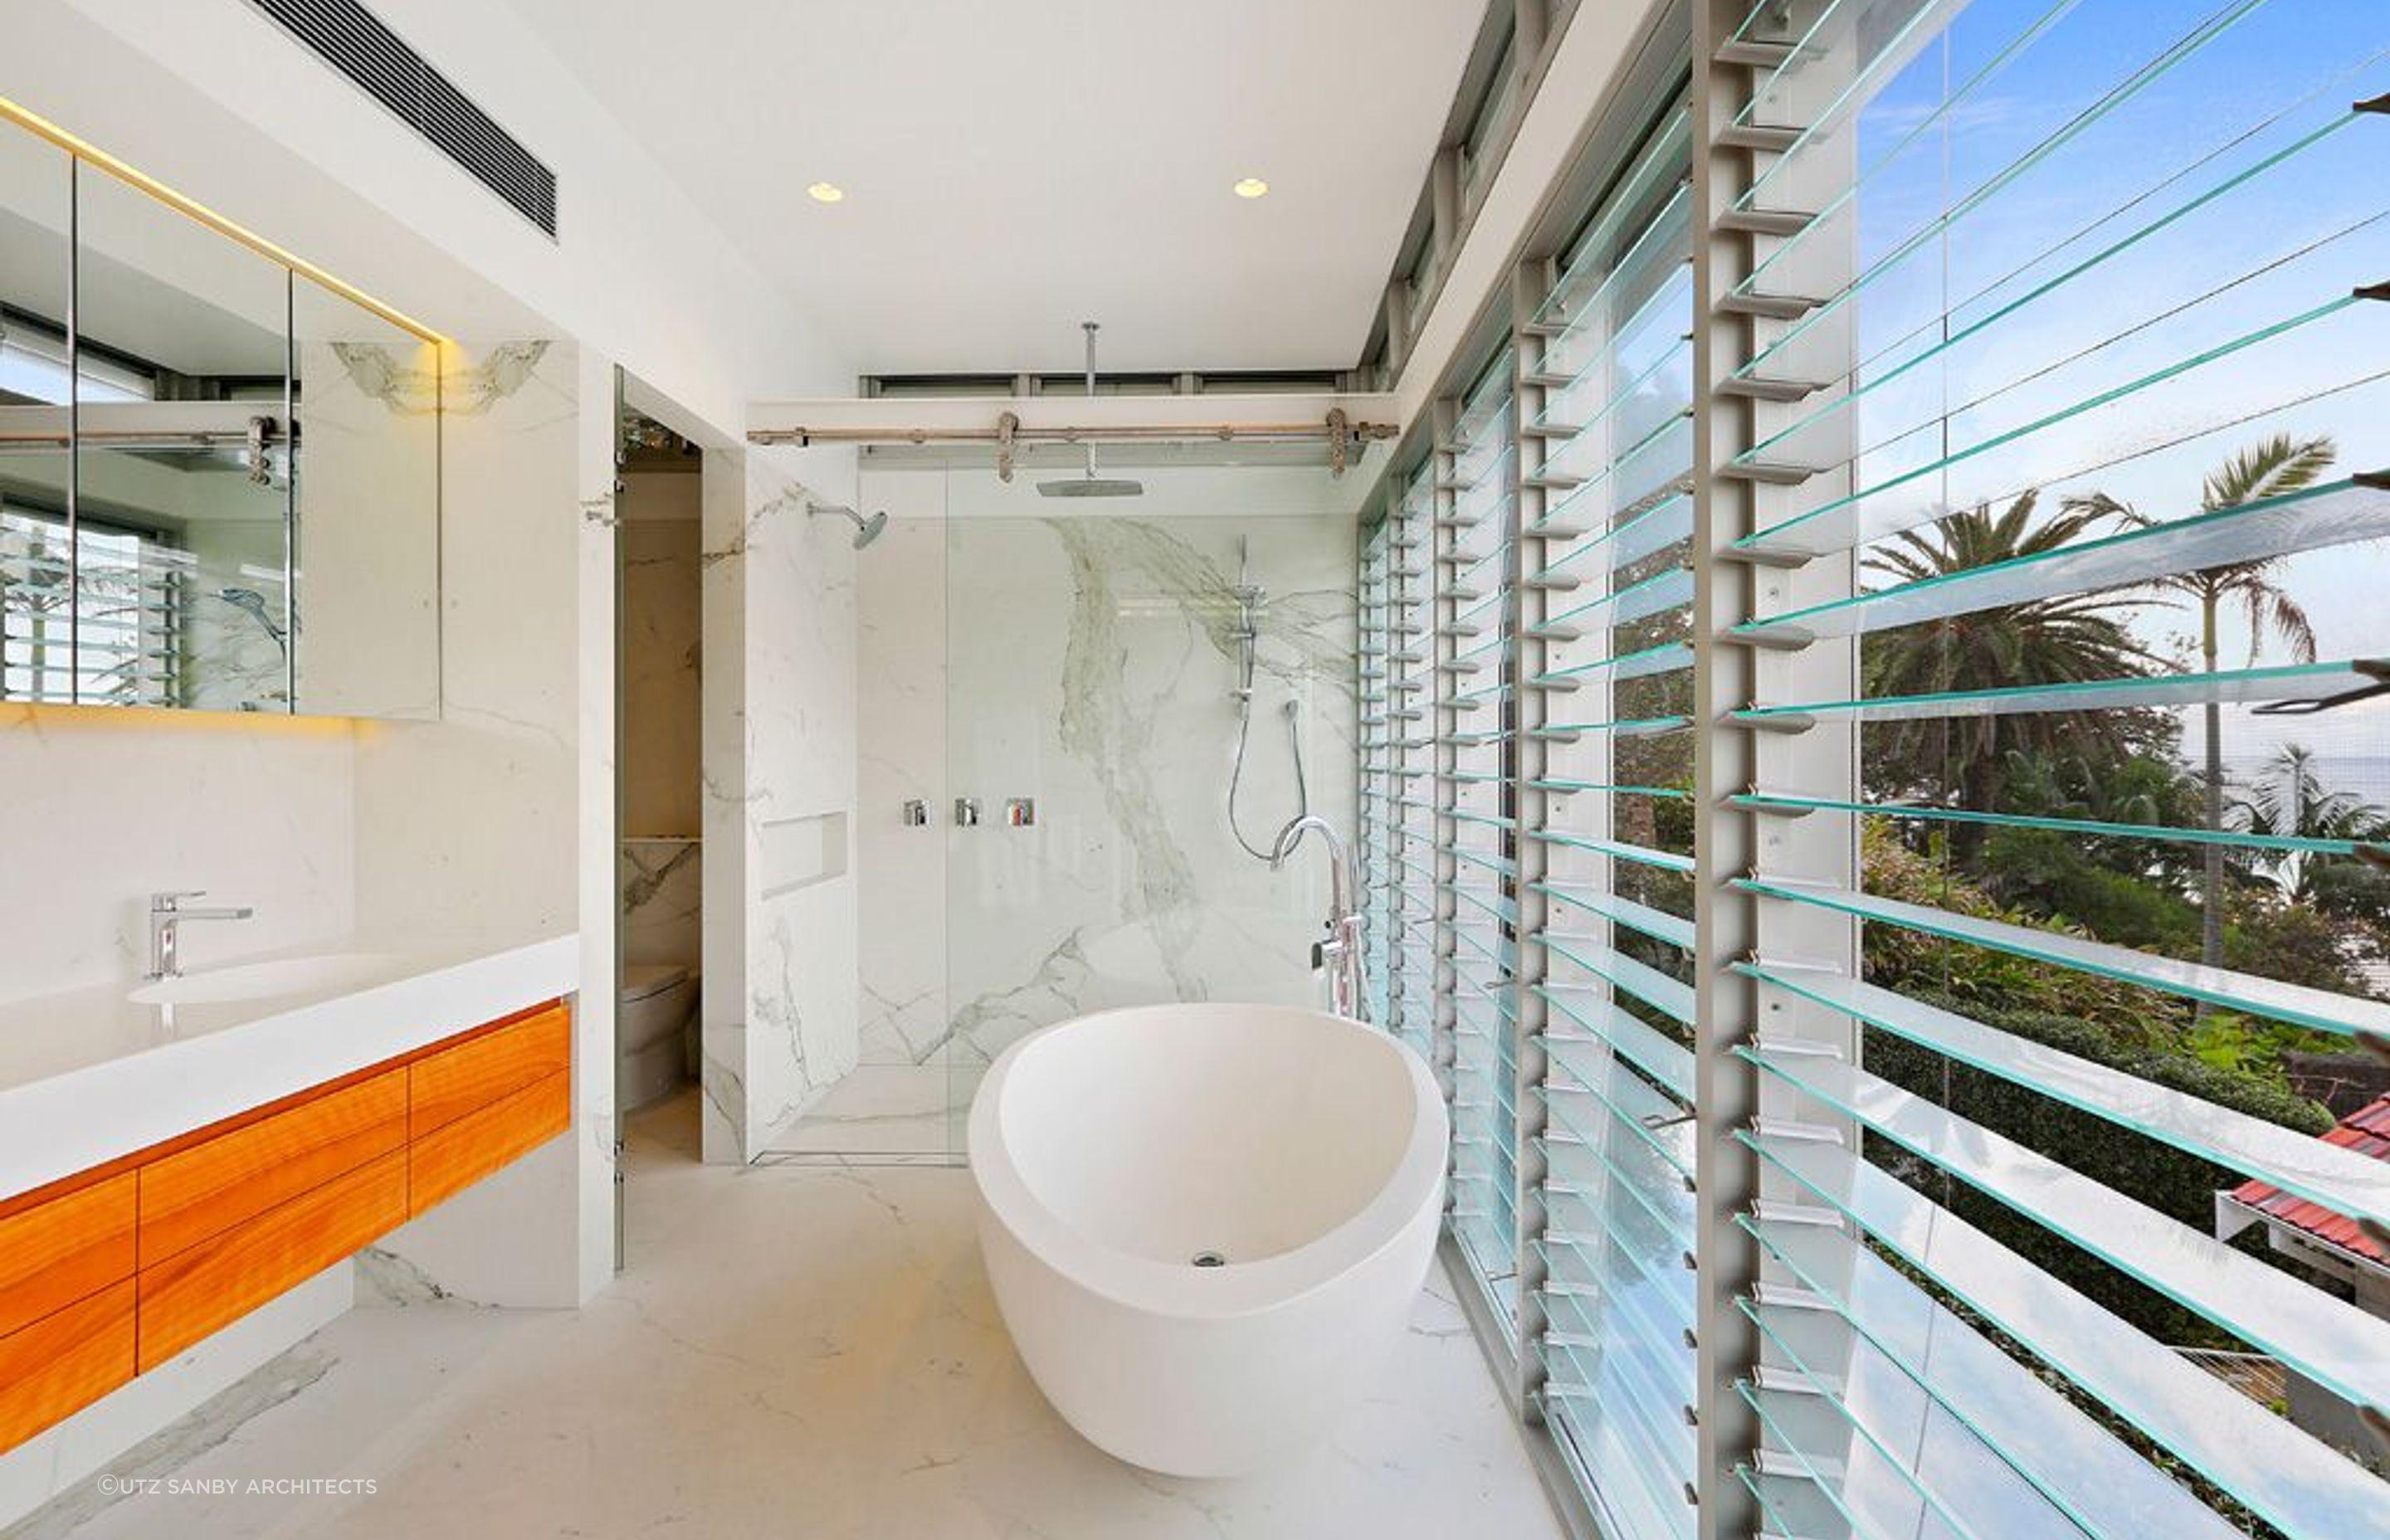 A full bathroom installation can take between 3 - 12 weeks. Photography: Walters Media